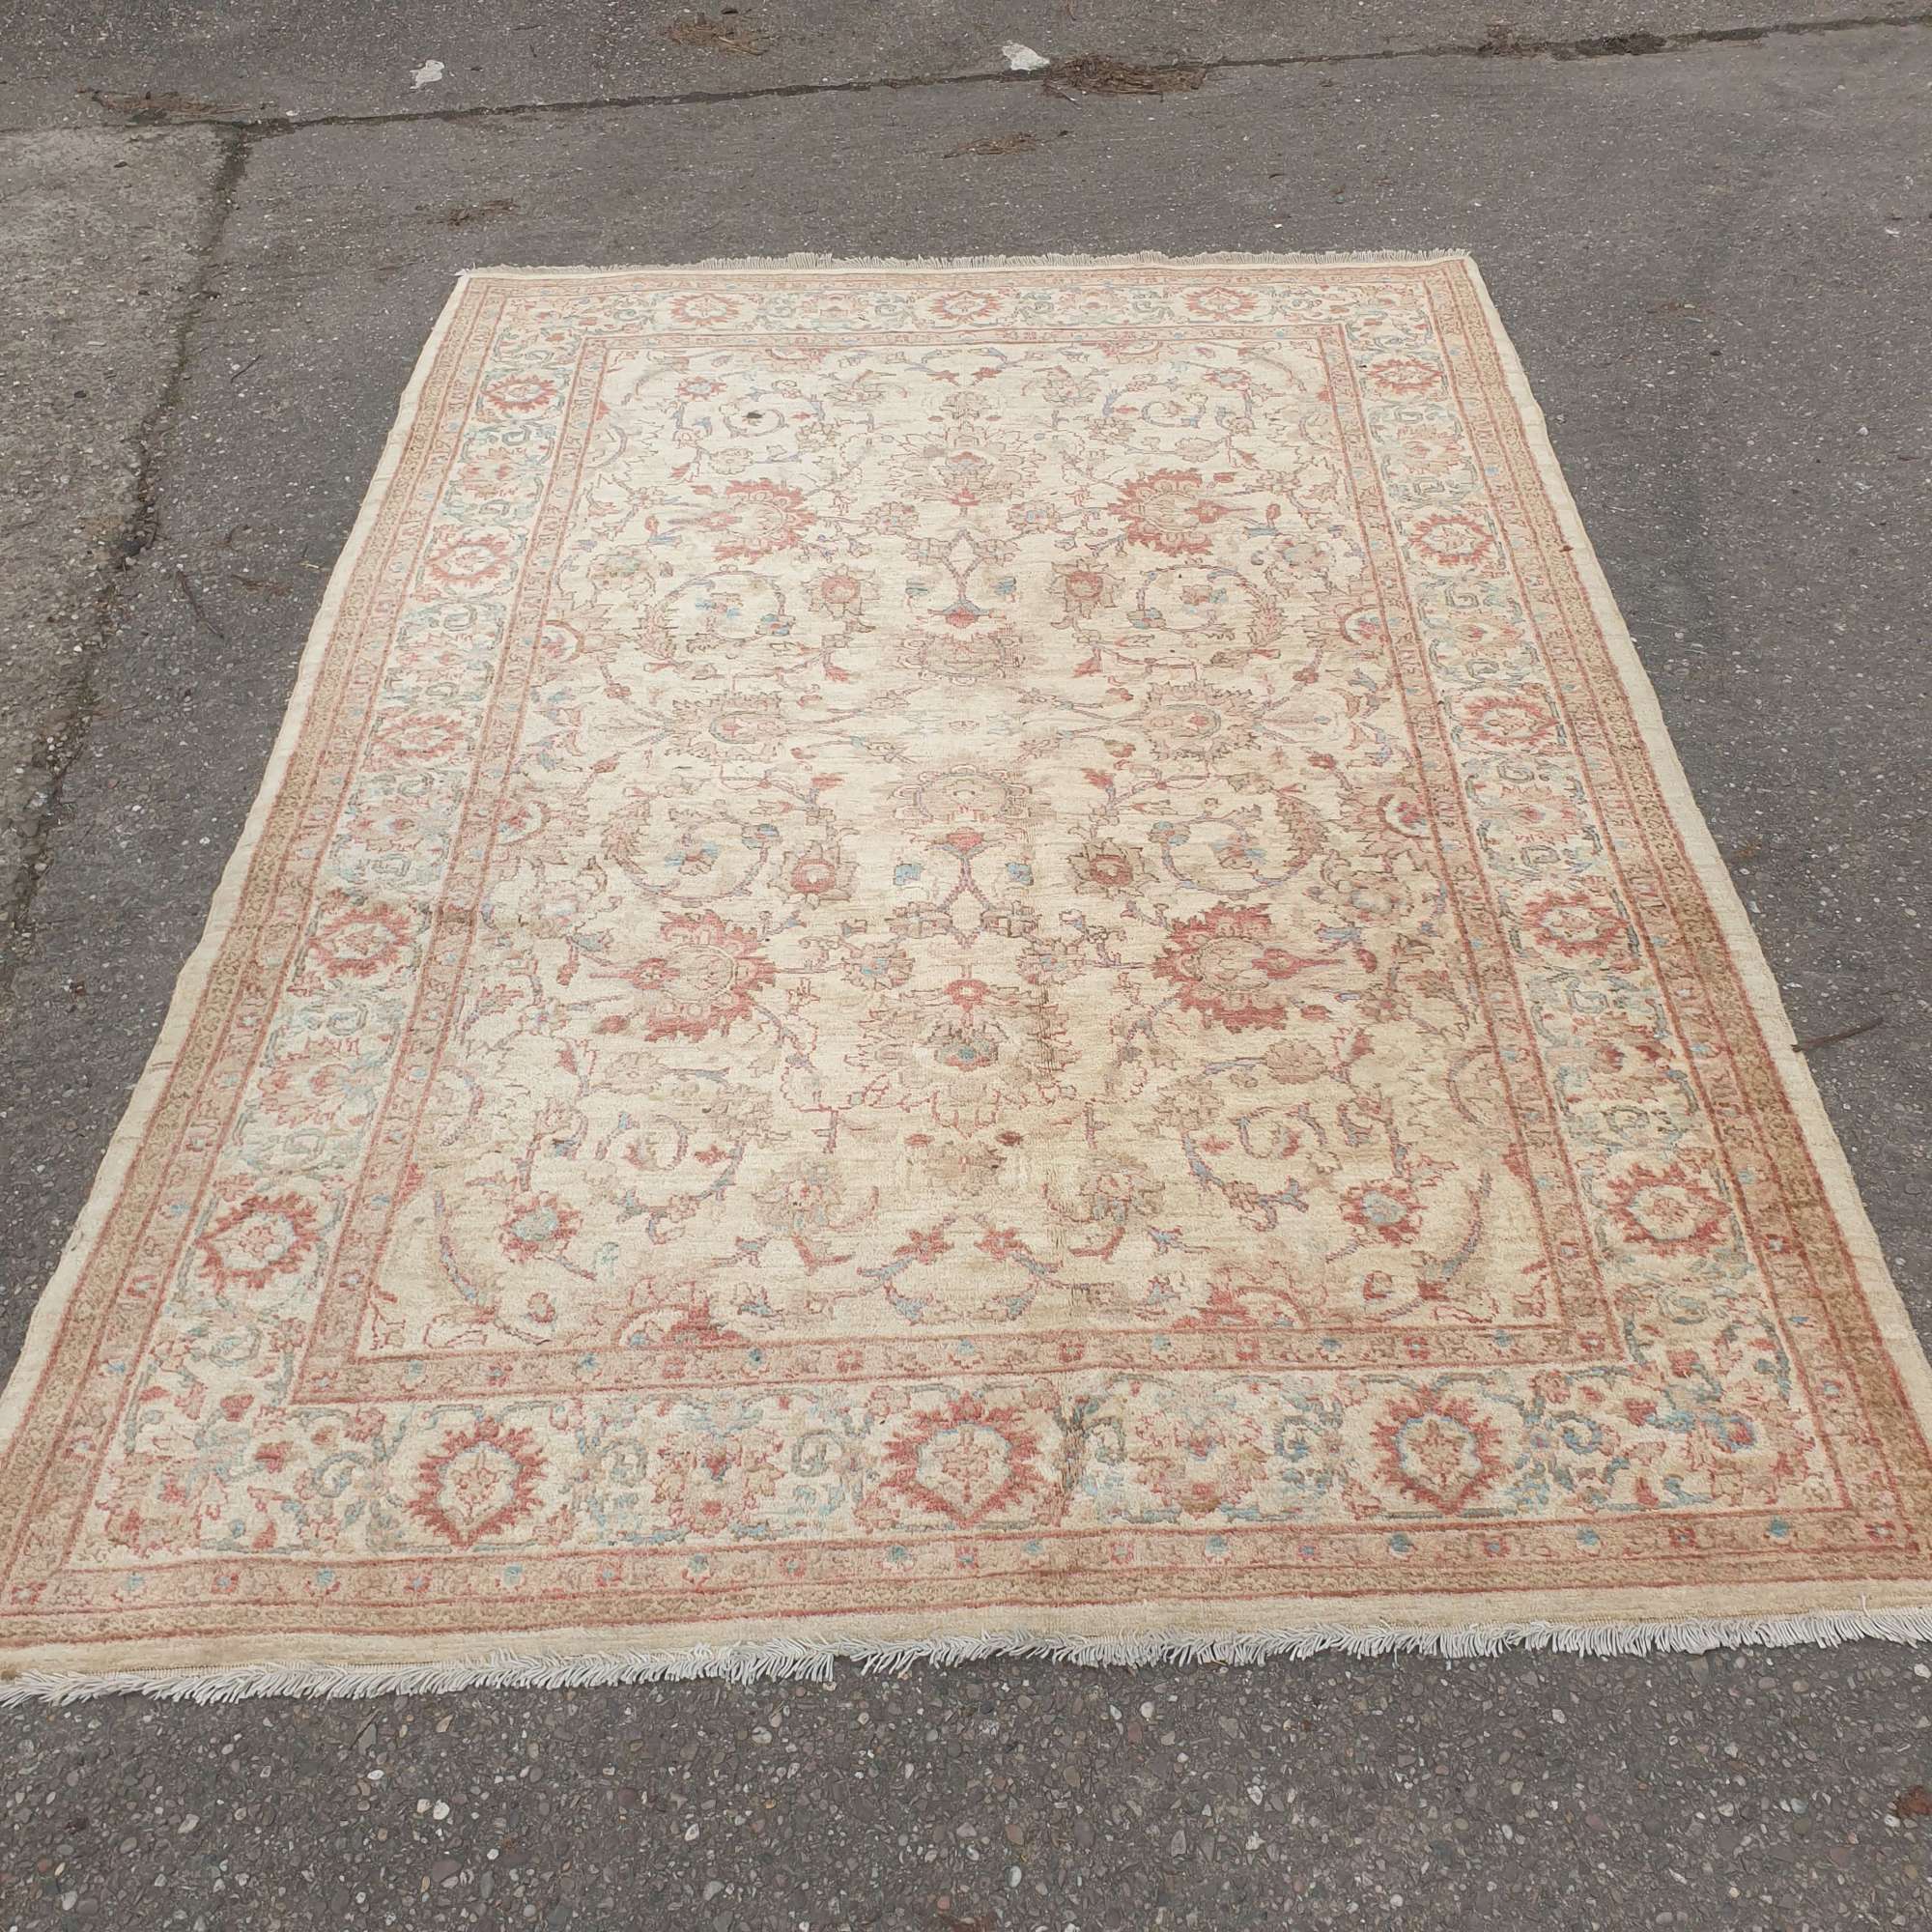 A Superb Oriental Carpet